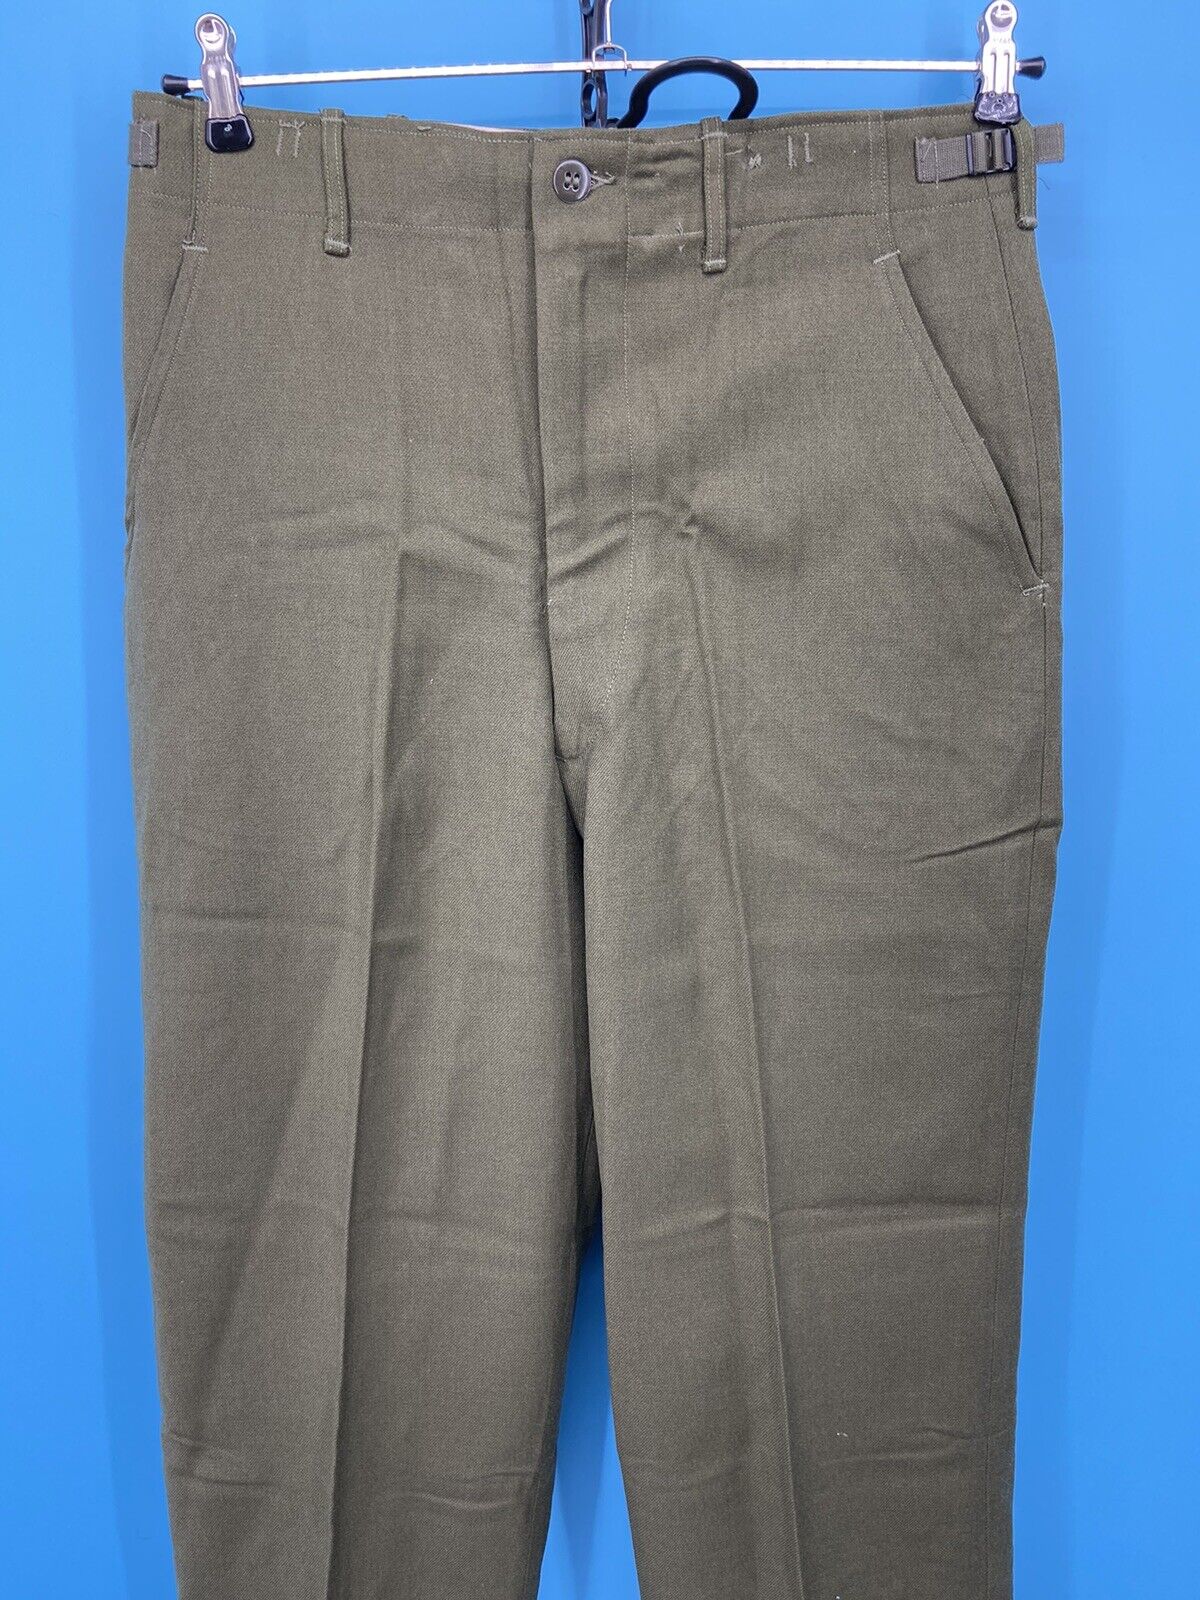 Vtg Korean War Pants Small Green M-1951 US Army Field Trouser Wool OG-108 Belted